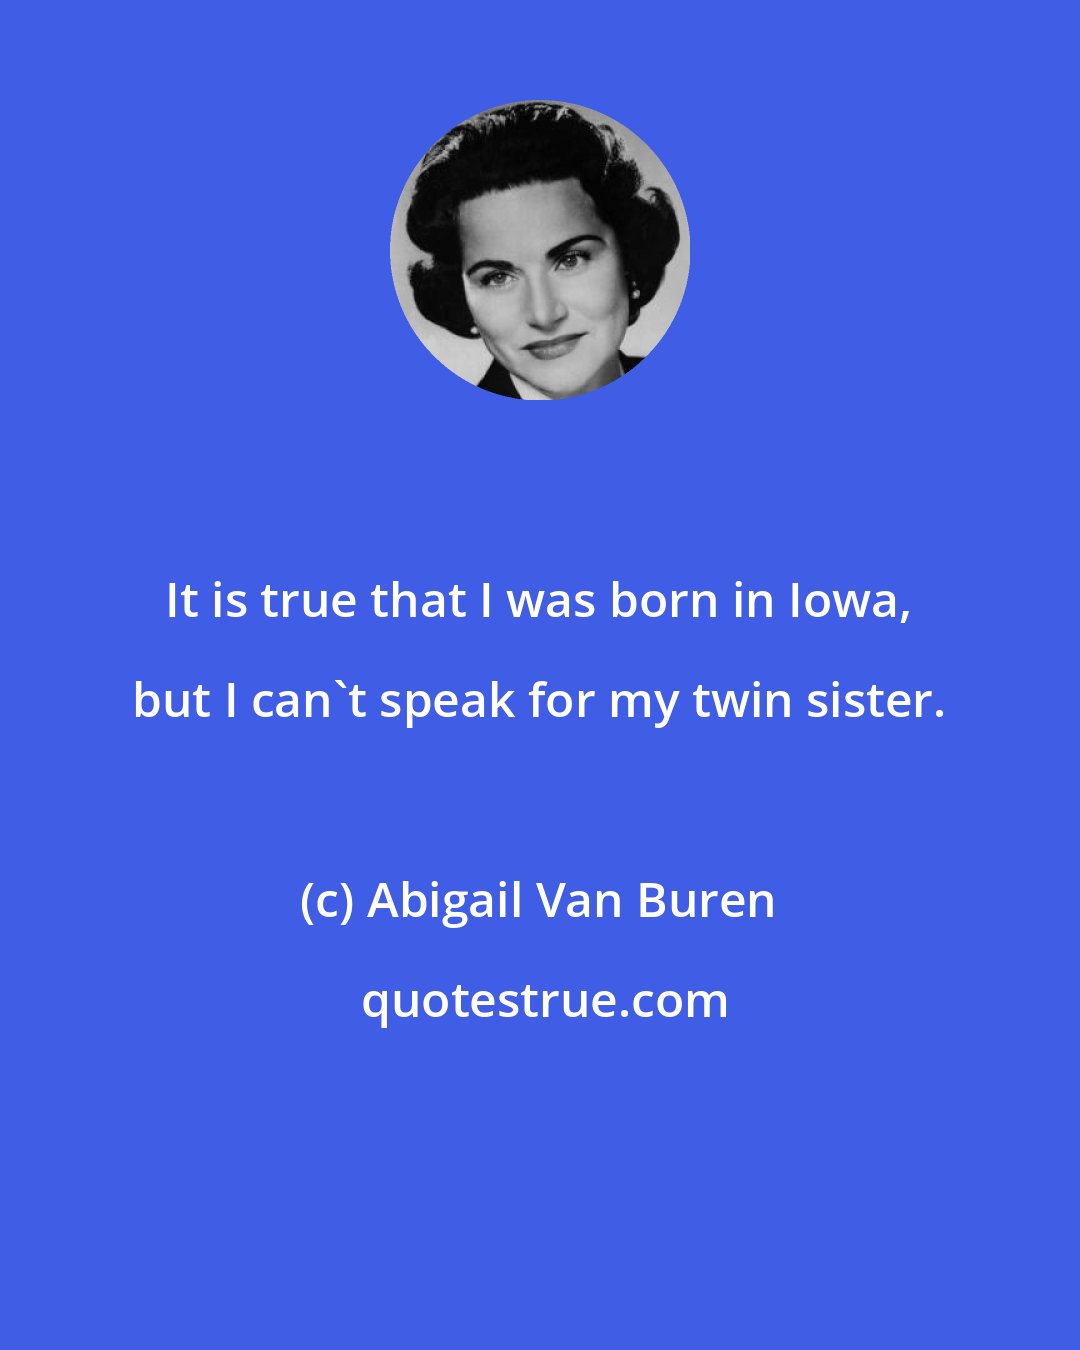 Abigail Van Buren: It is true that I was born in Iowa, but I can't speak for my twin sister.